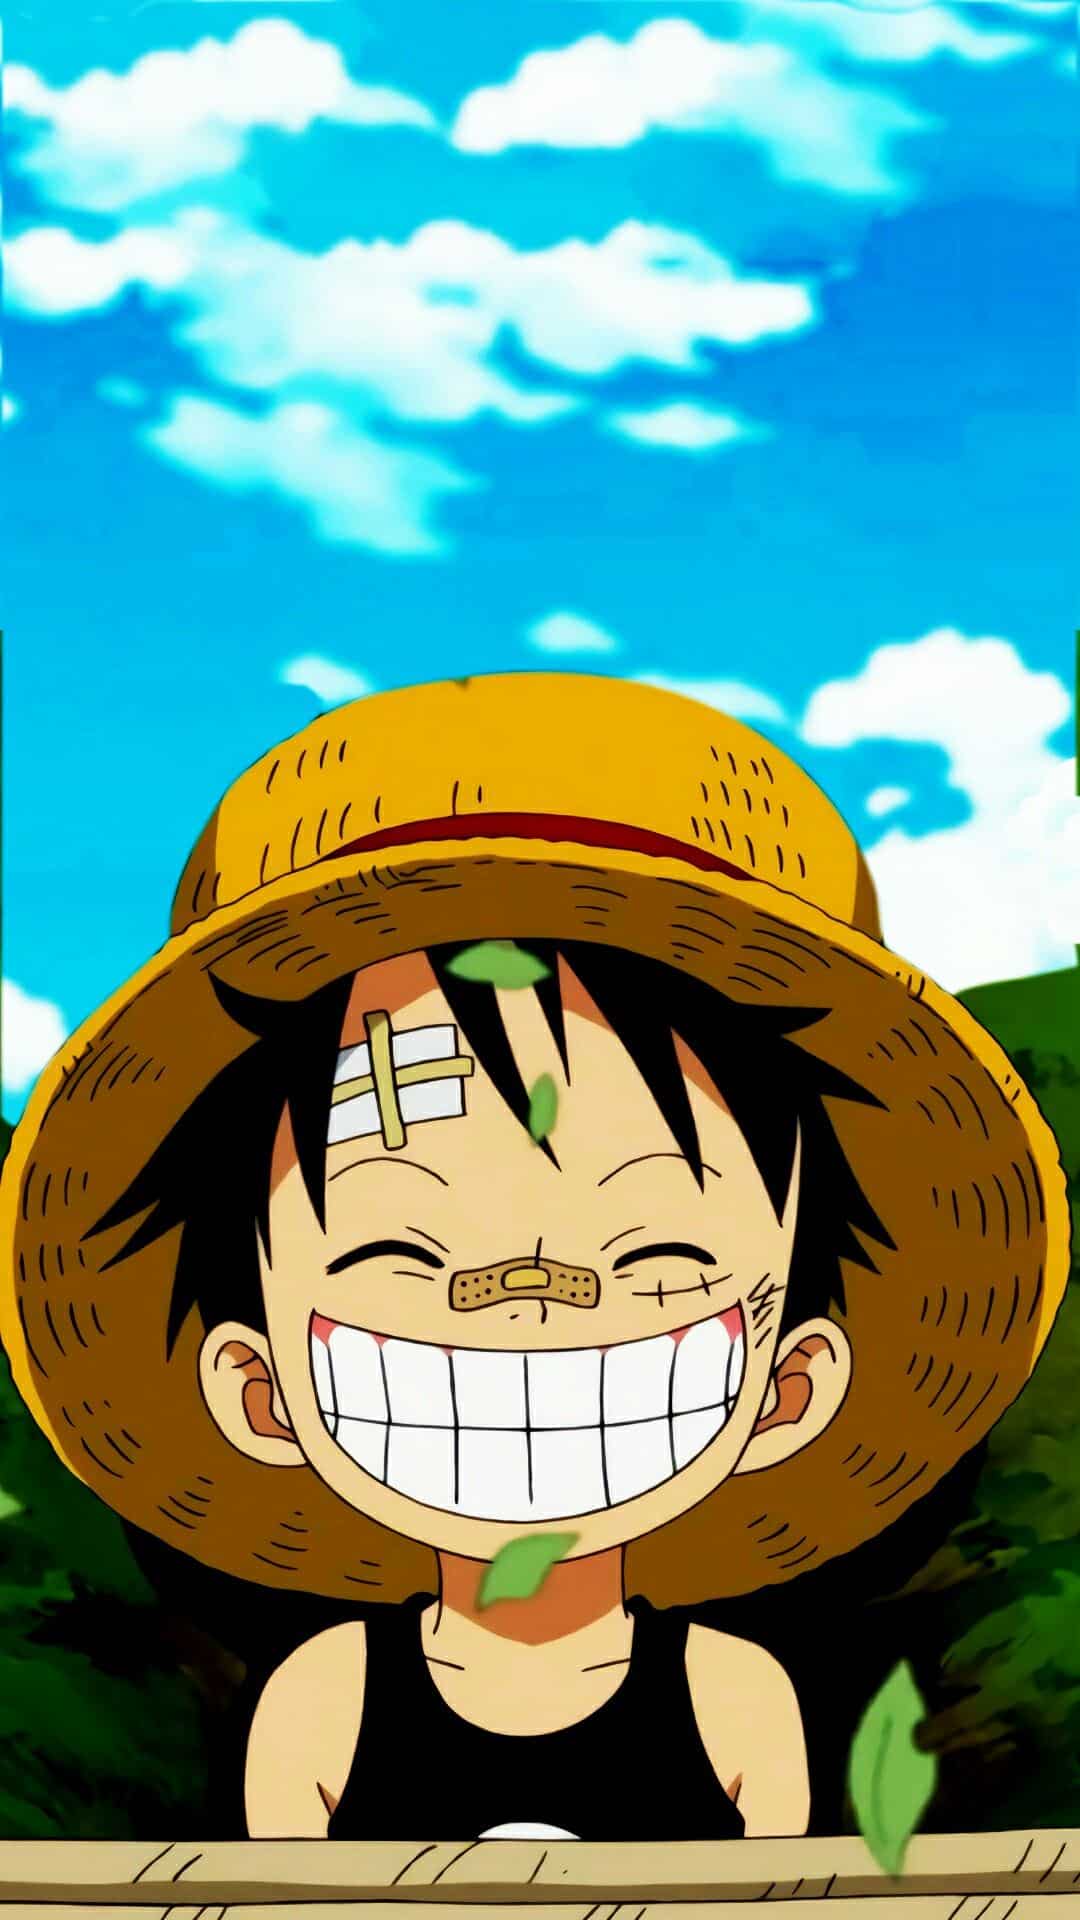 Hình One Piece Luffy Cute vui nhộn